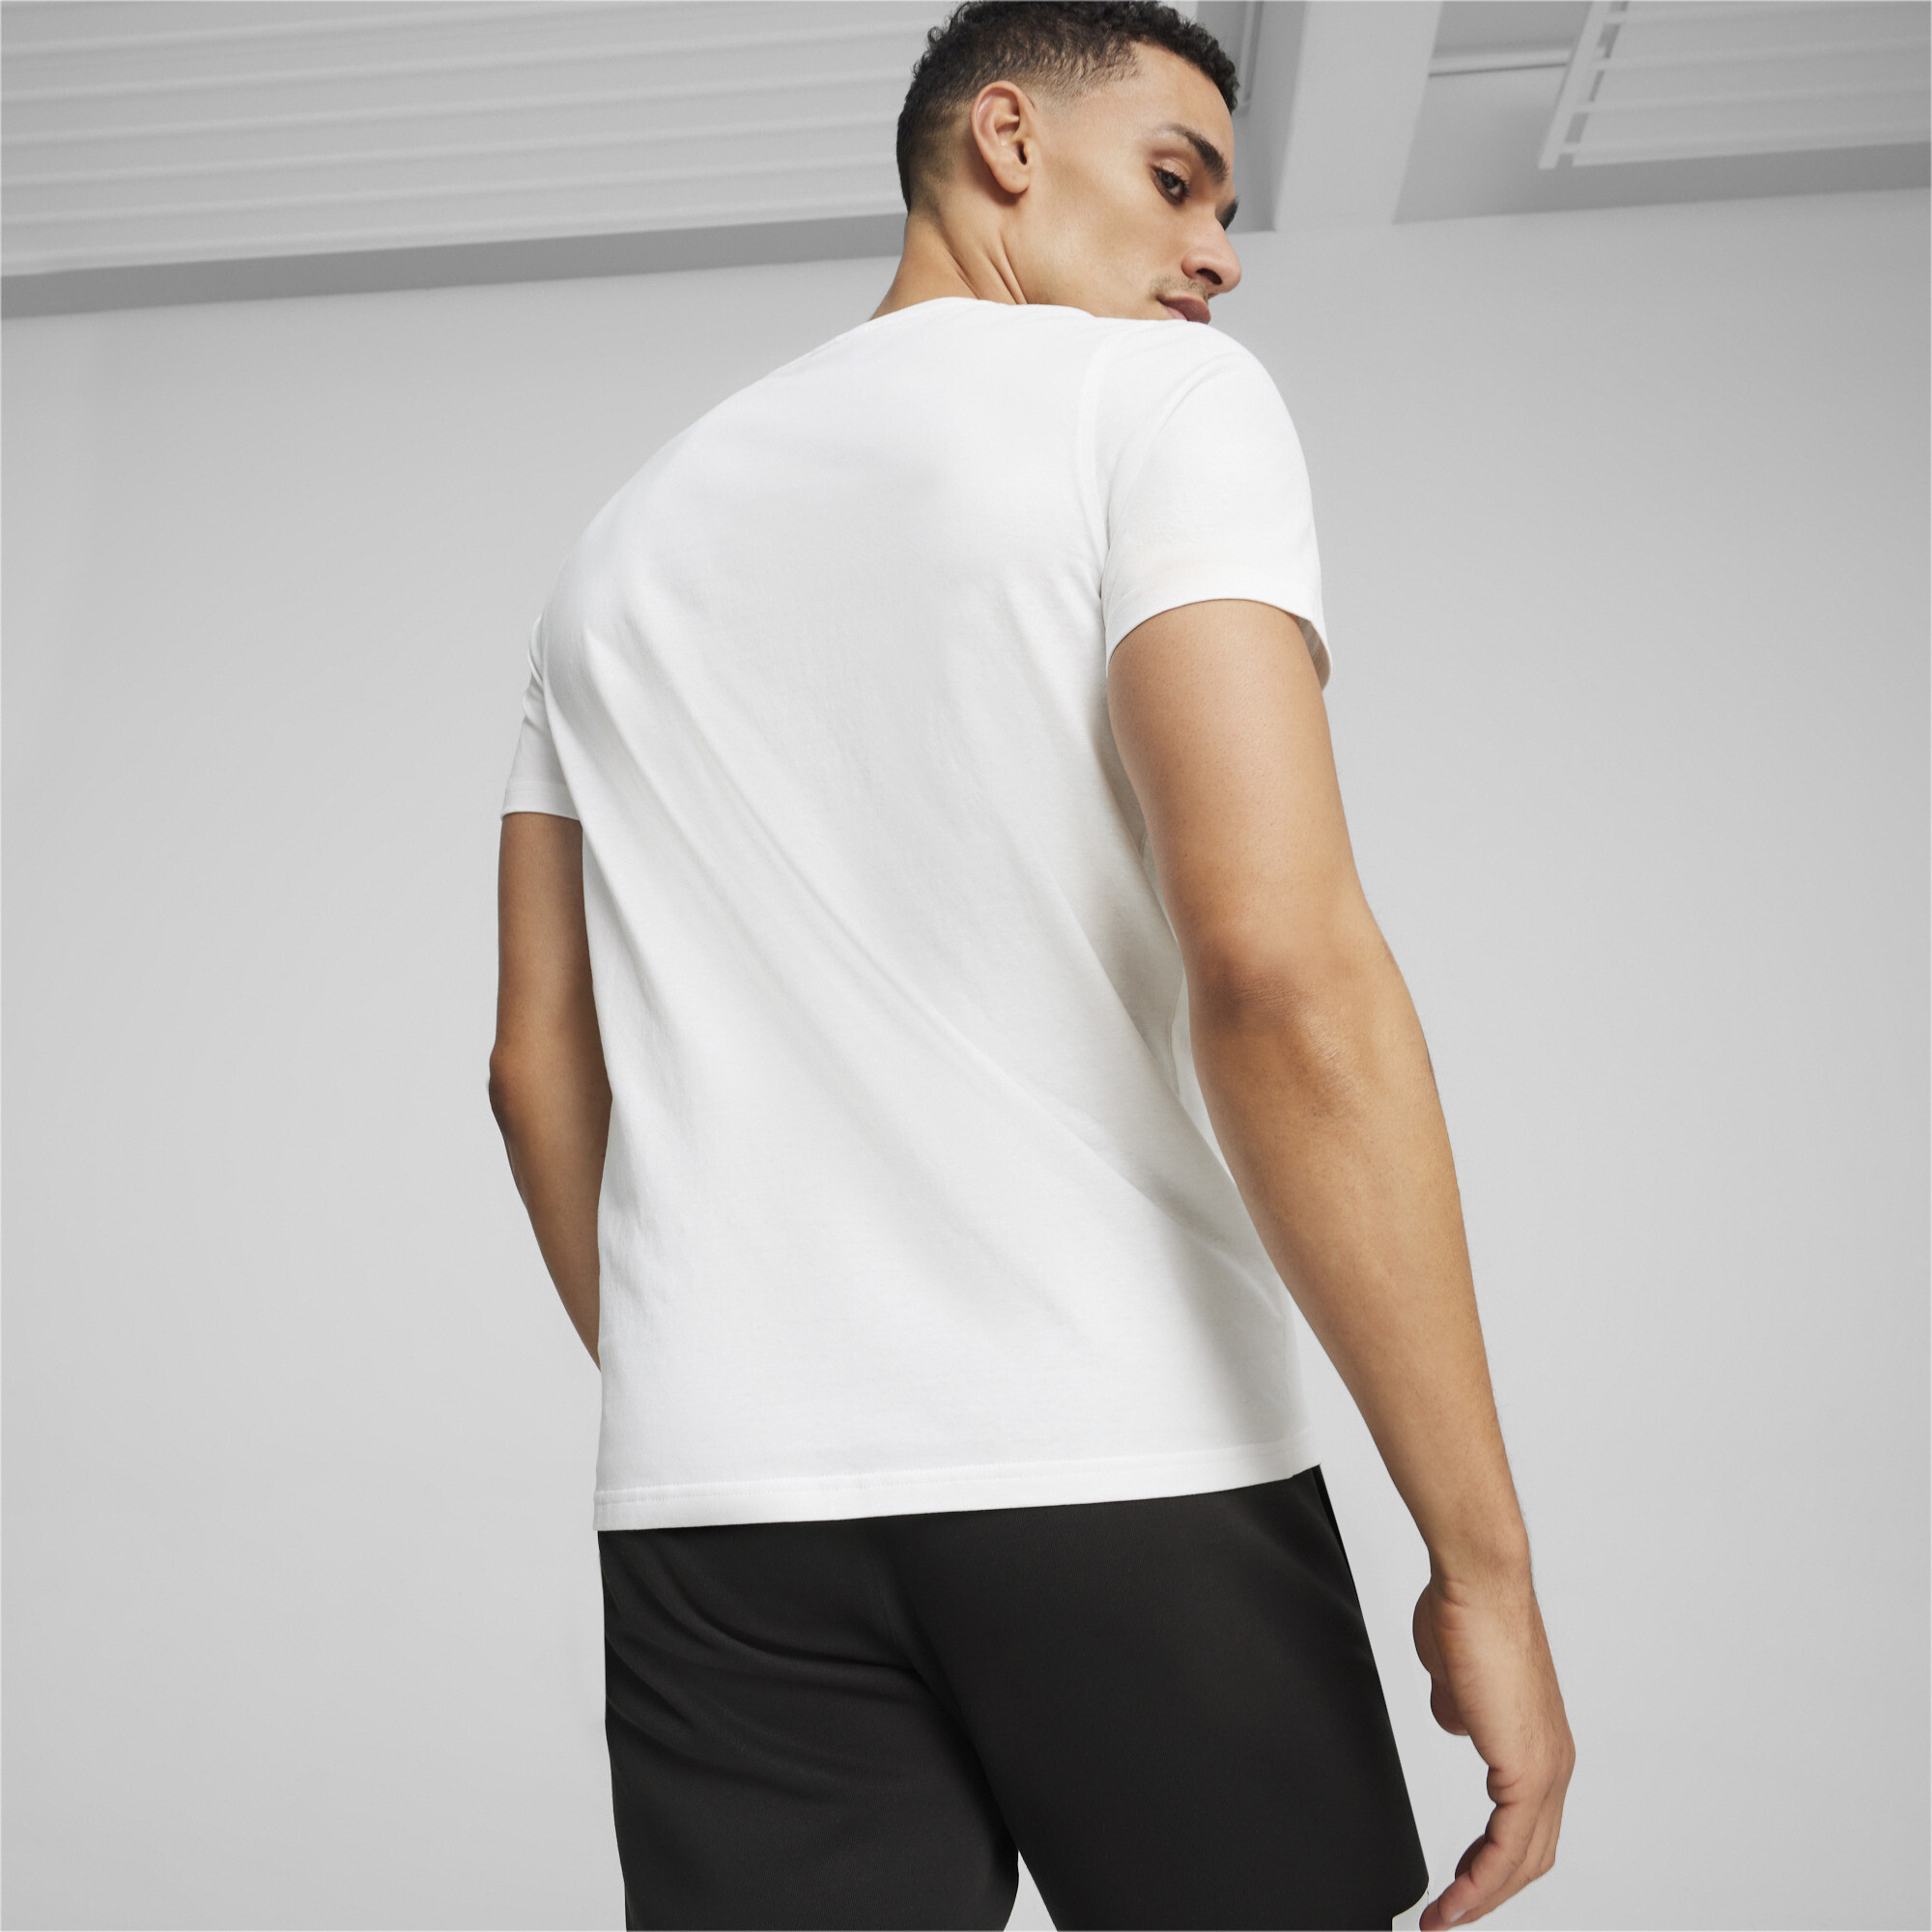 Men's PUMA The Hooper Basketball T-Shirt In White, Size Medium